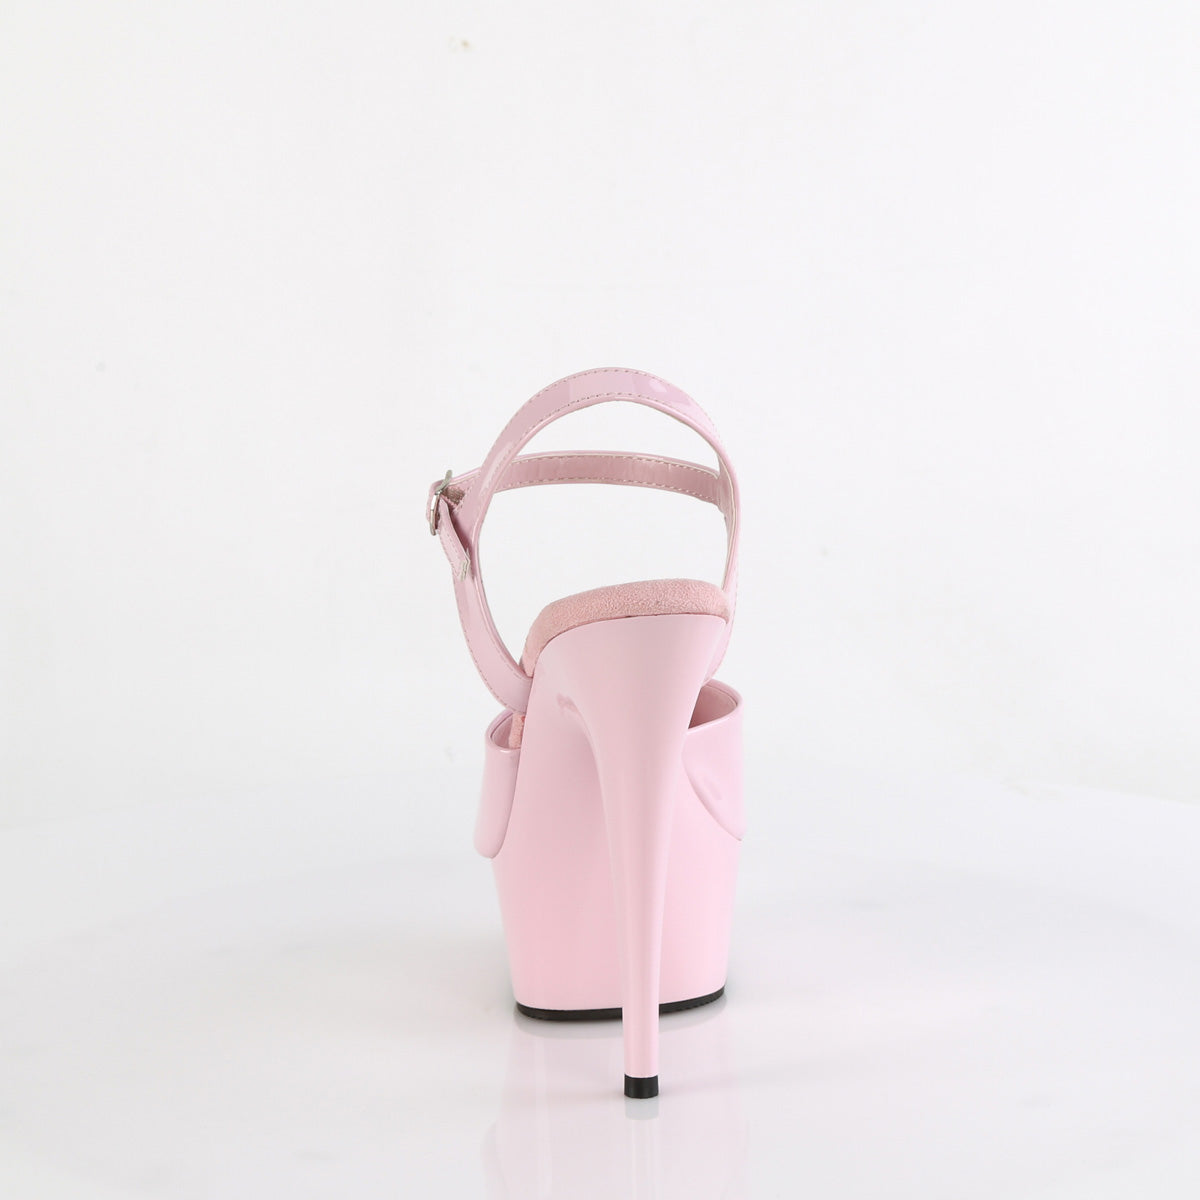 6 Inch Heel DELIGHT-609 Baby Pink Patent